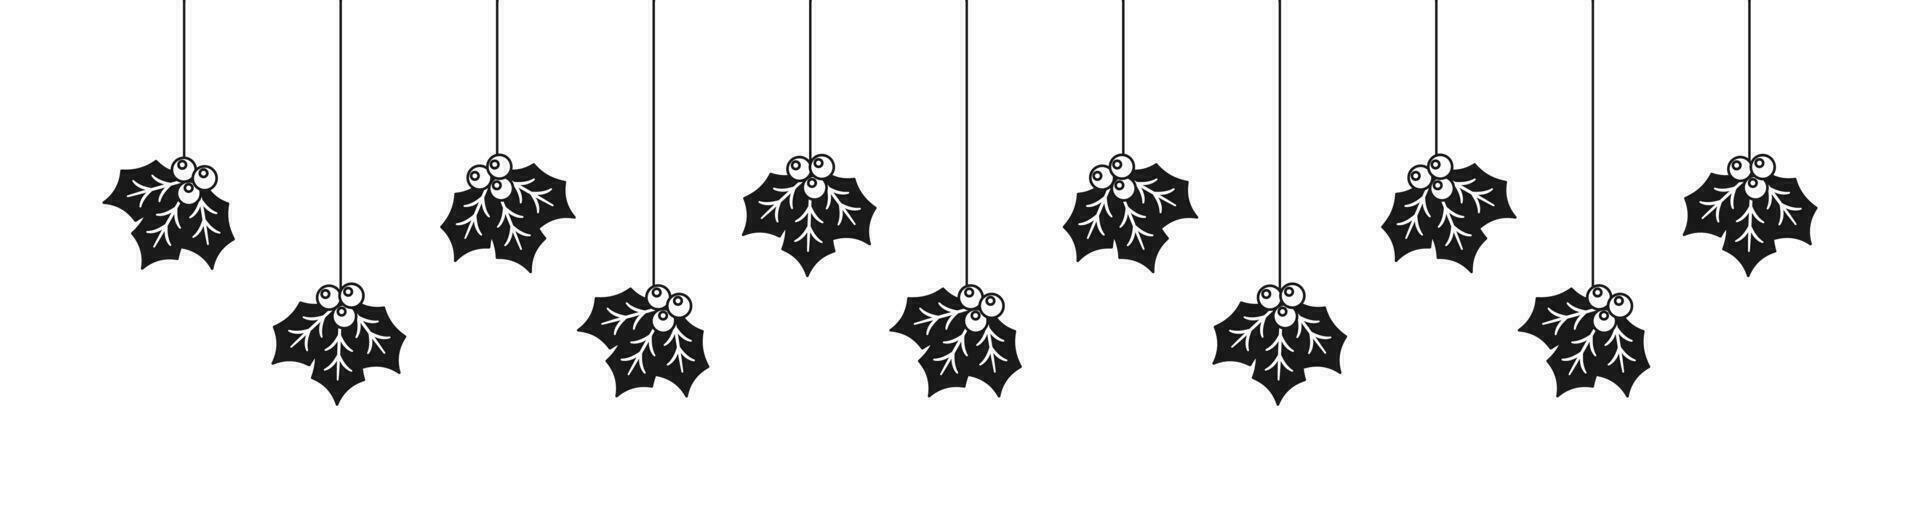 Merry Christmas Border Banner, Hanging Mistletoe Garland Silhouette. Winter Holiday Season Header Decoration. Vector illustration.